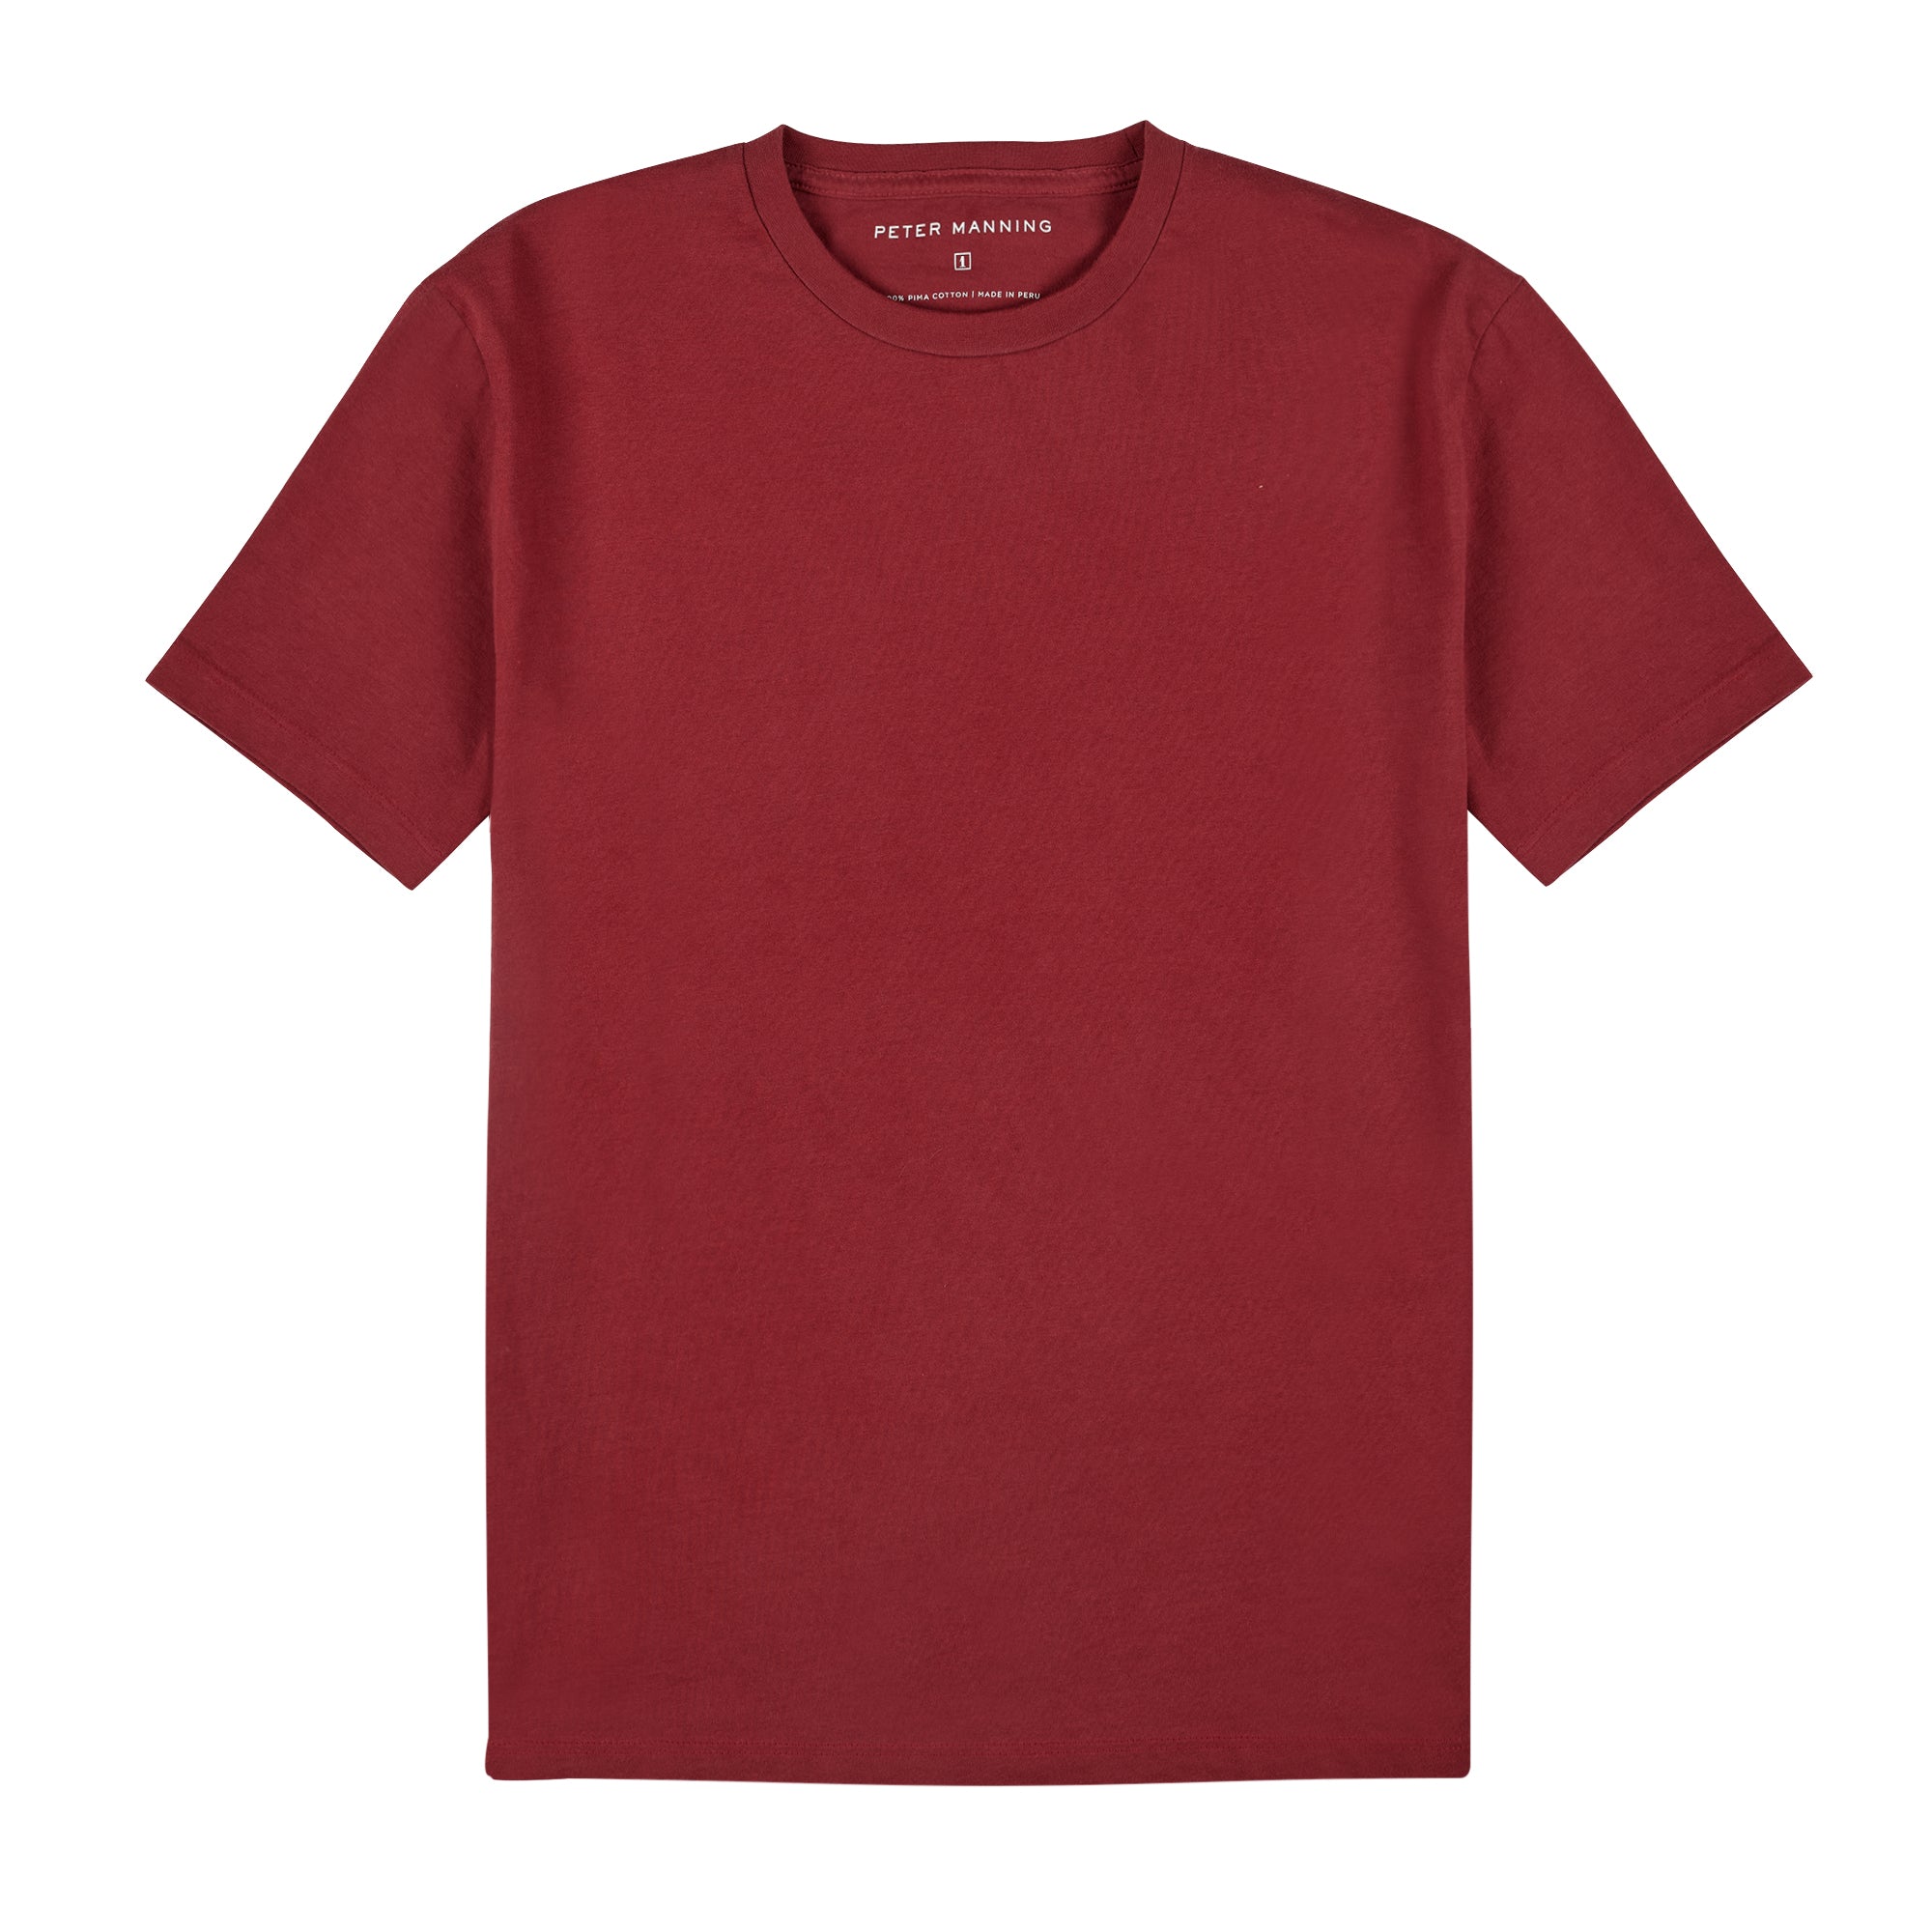 Plaid Flannel Pyjama Shirt Red - Unisex - Au Lit x Province of